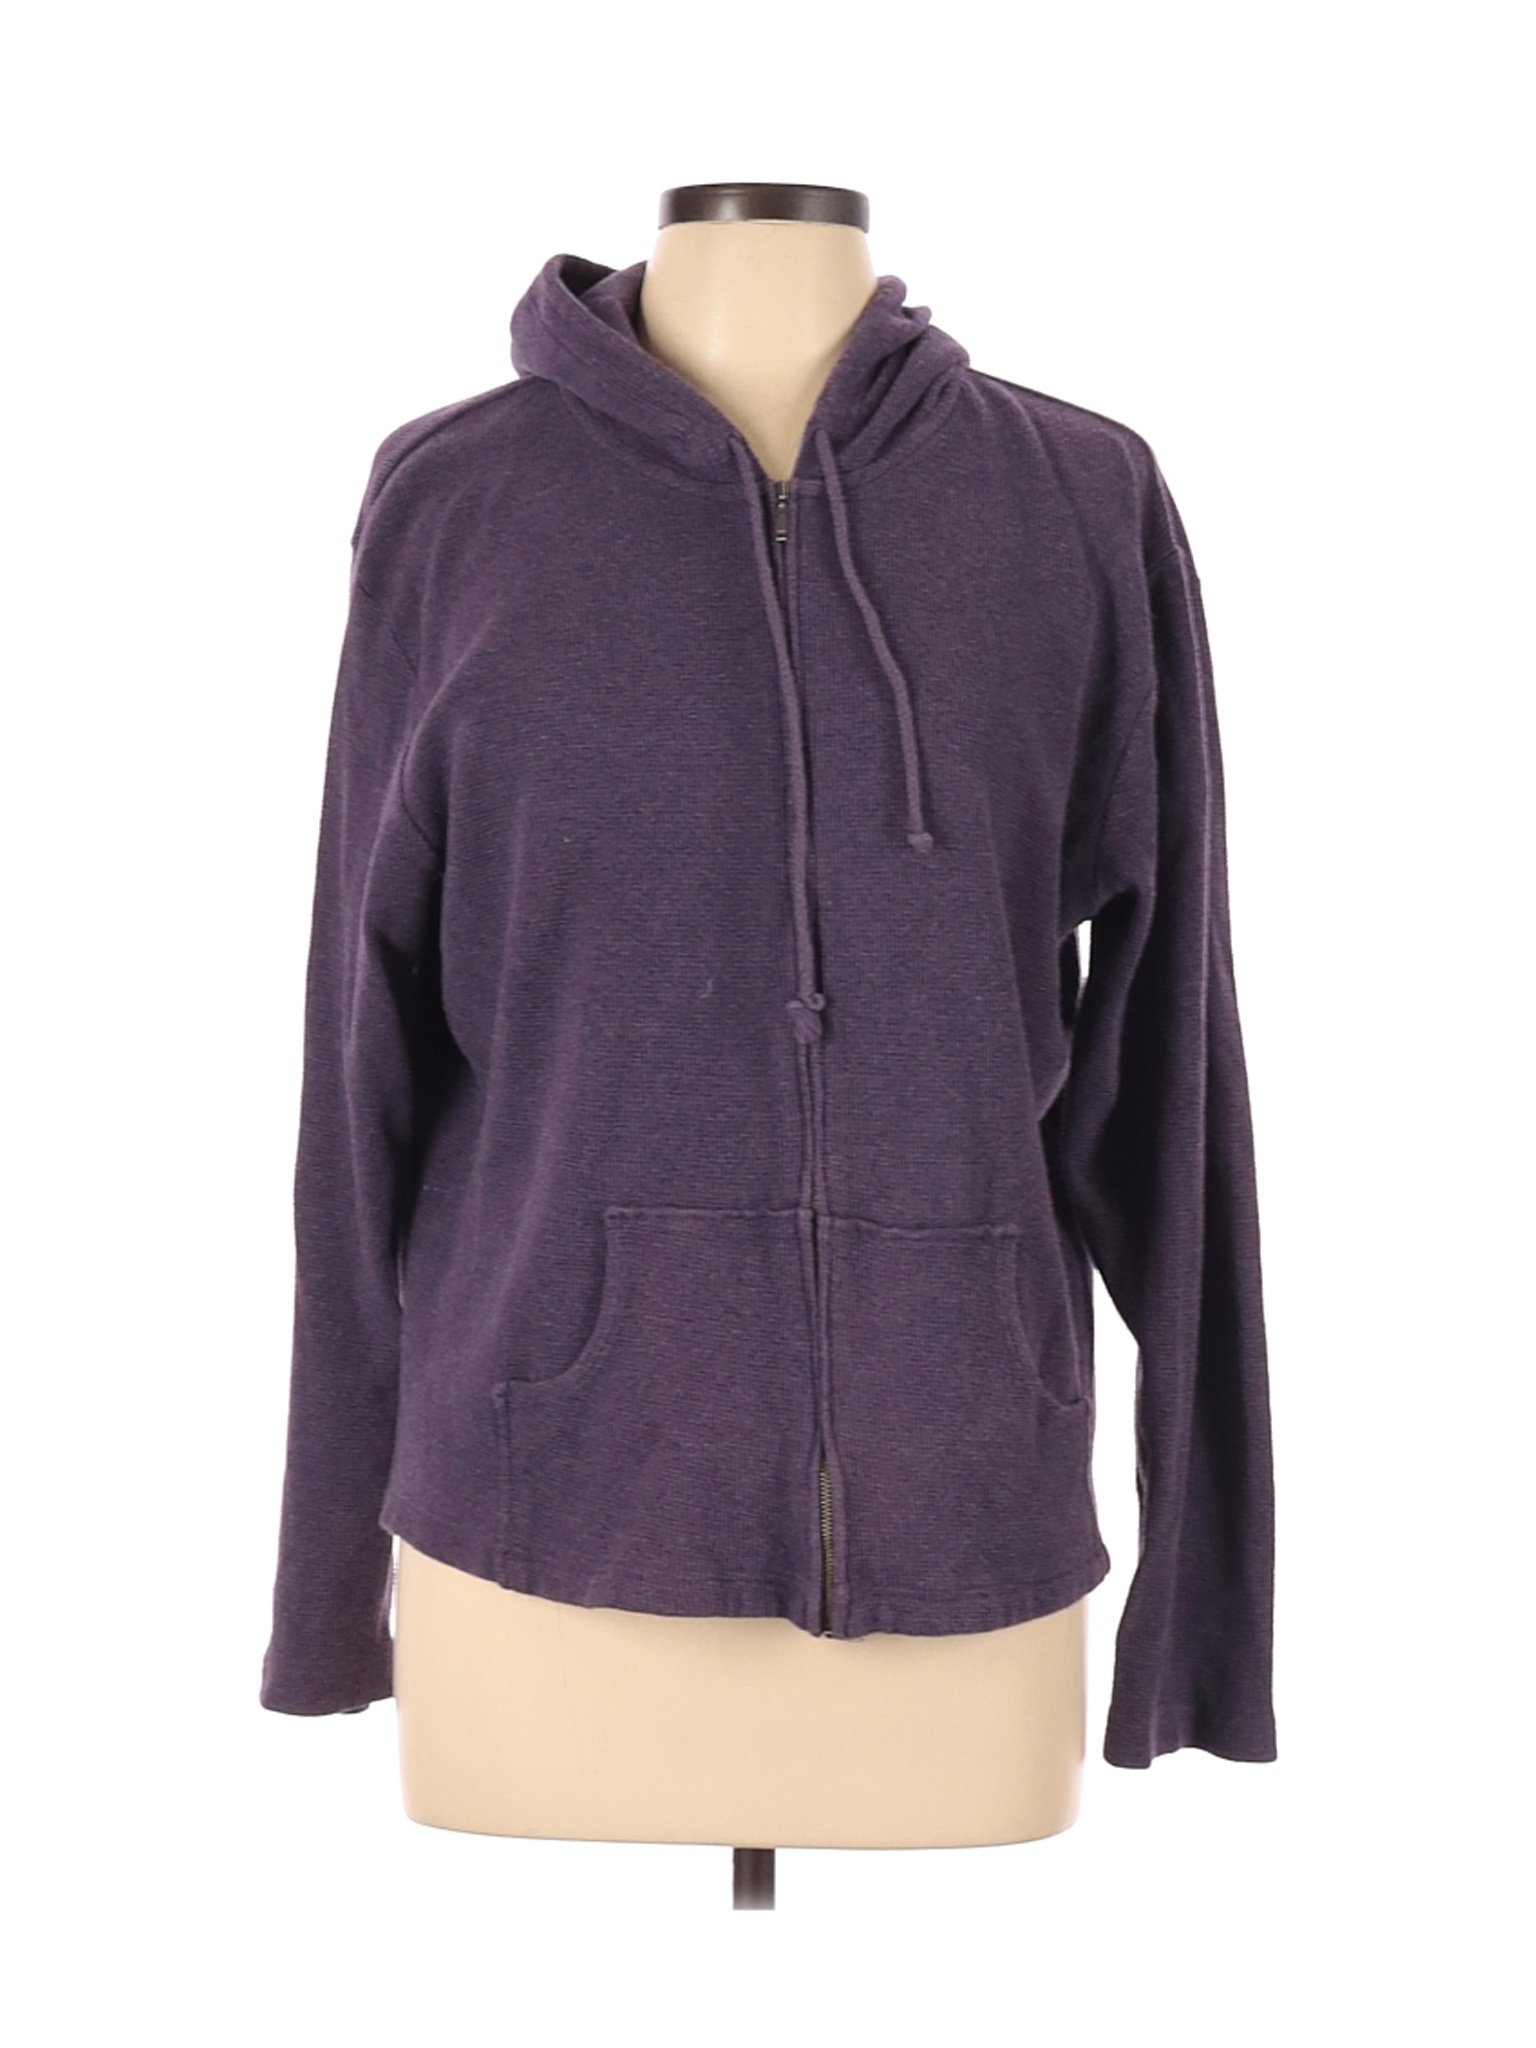 Genuine Sonoma Jean Company Women Purple Zip Up Hoodie L | eBay